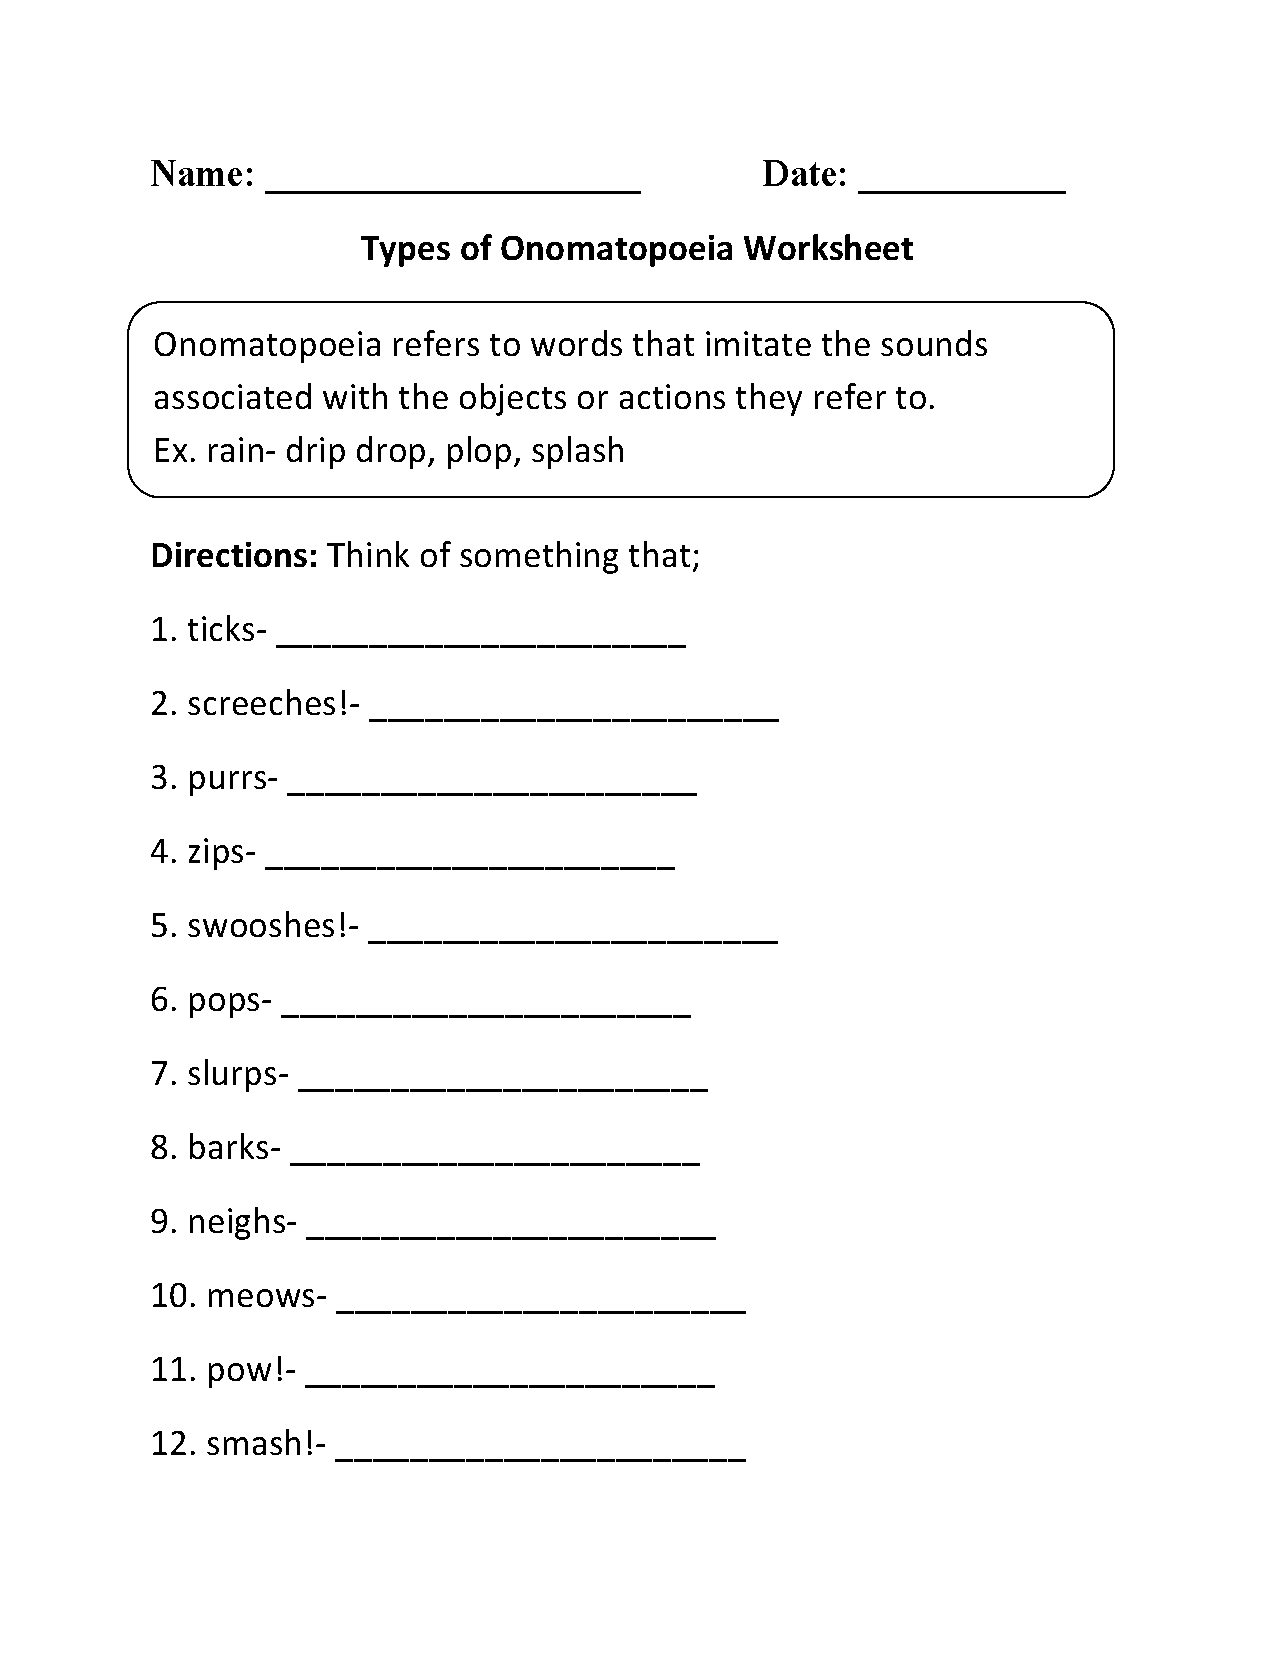 Types of Onomatopoeia Worksheet